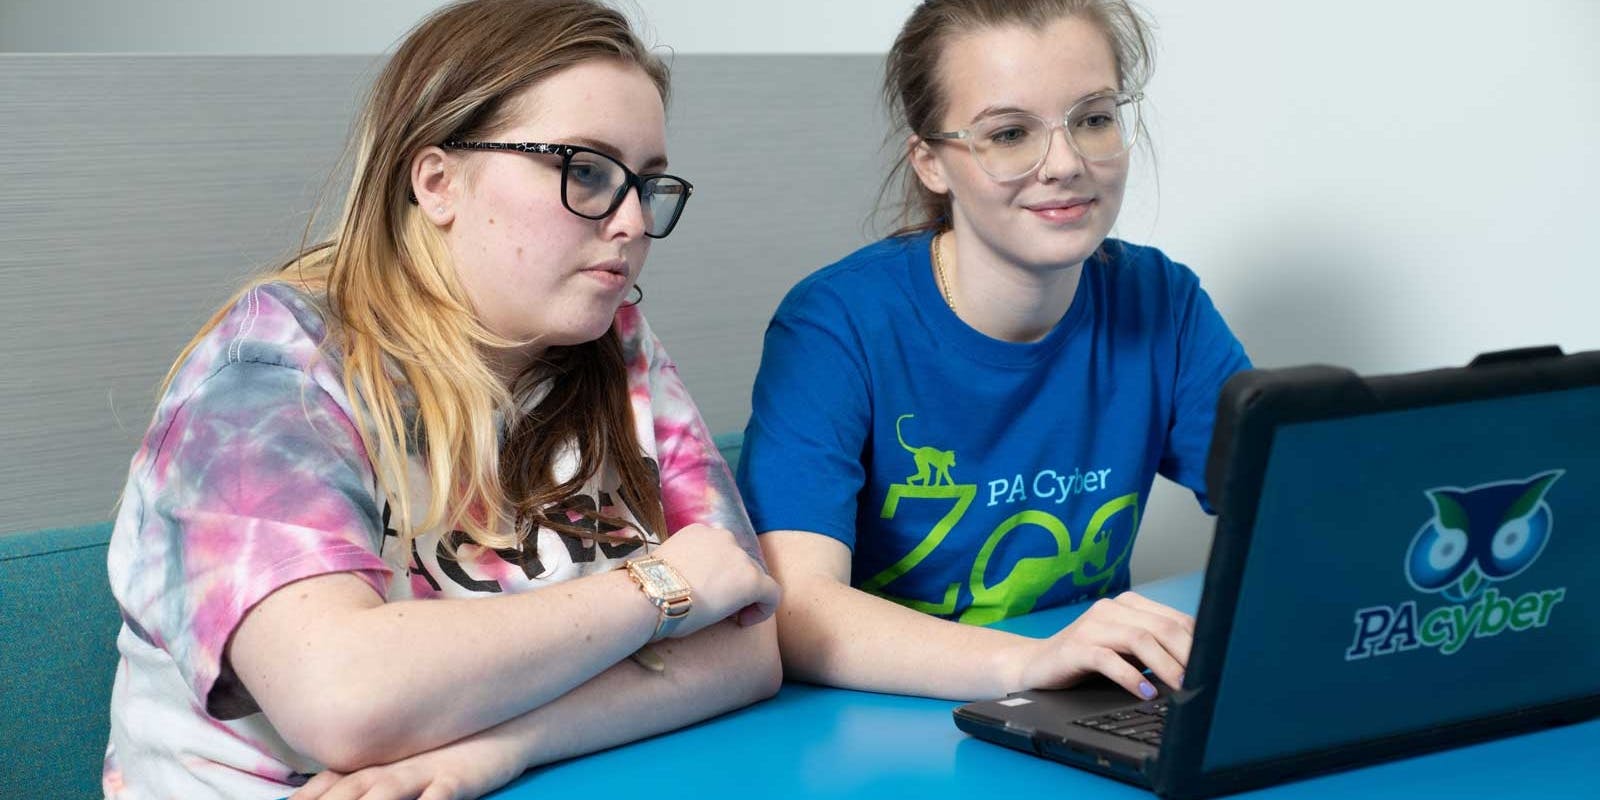 PA Cyber Students on a laptop